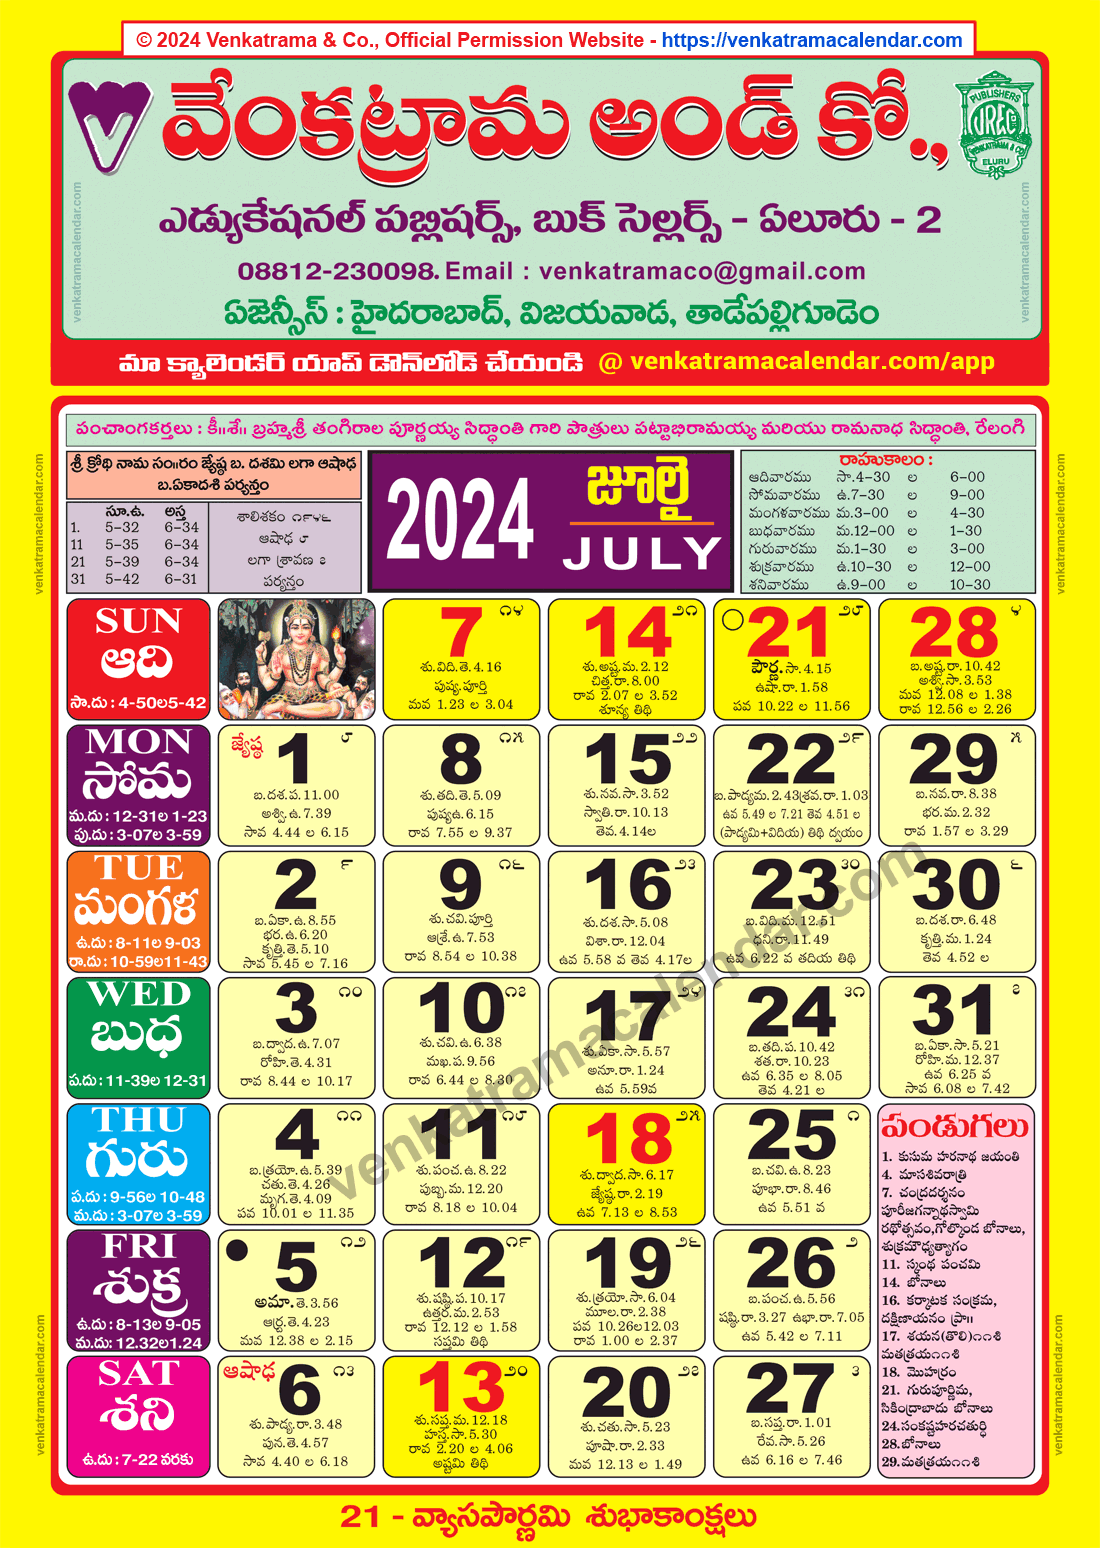 Venkatrama Calendar 2024 July